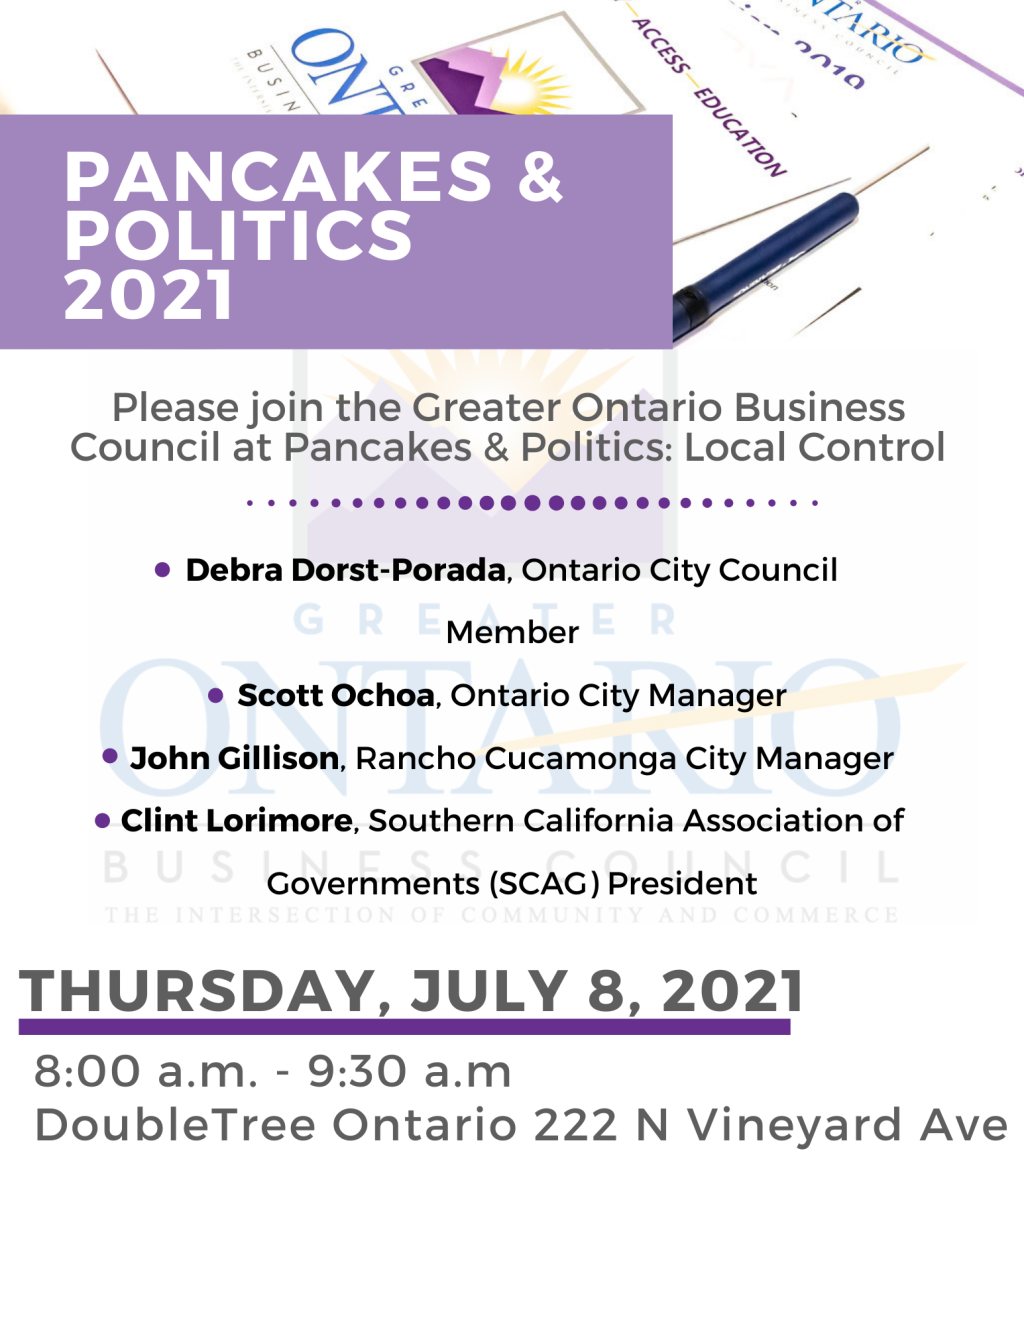 Pancakes & Politics Greater Ontario Business Council